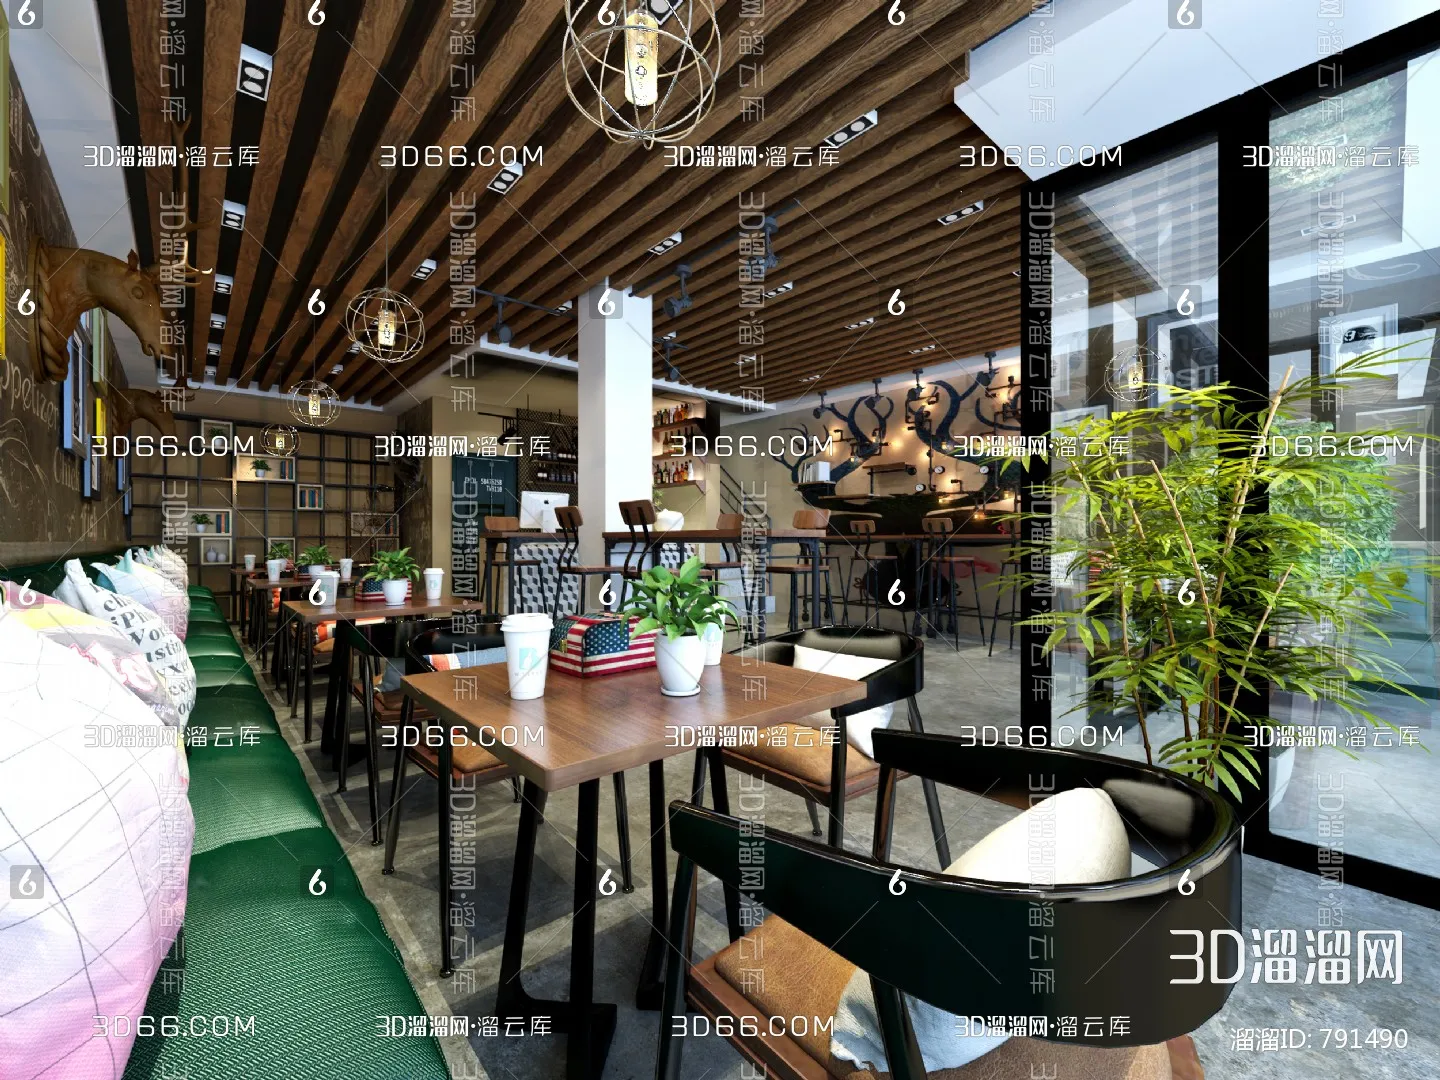 Coffee Shop 3D Scenes – 0423